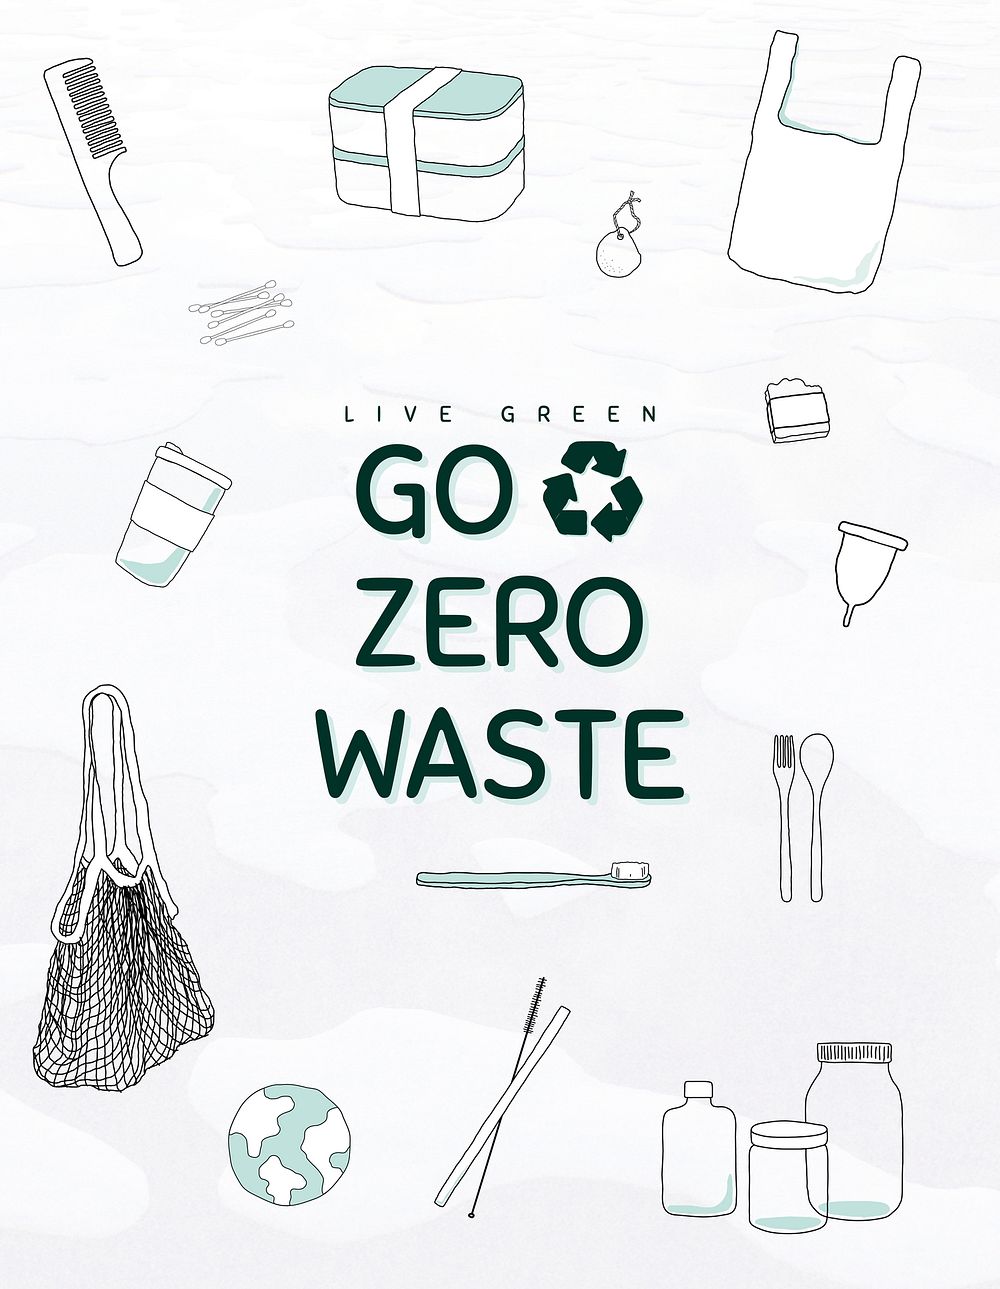 Live green flyer zero waste lifestyle